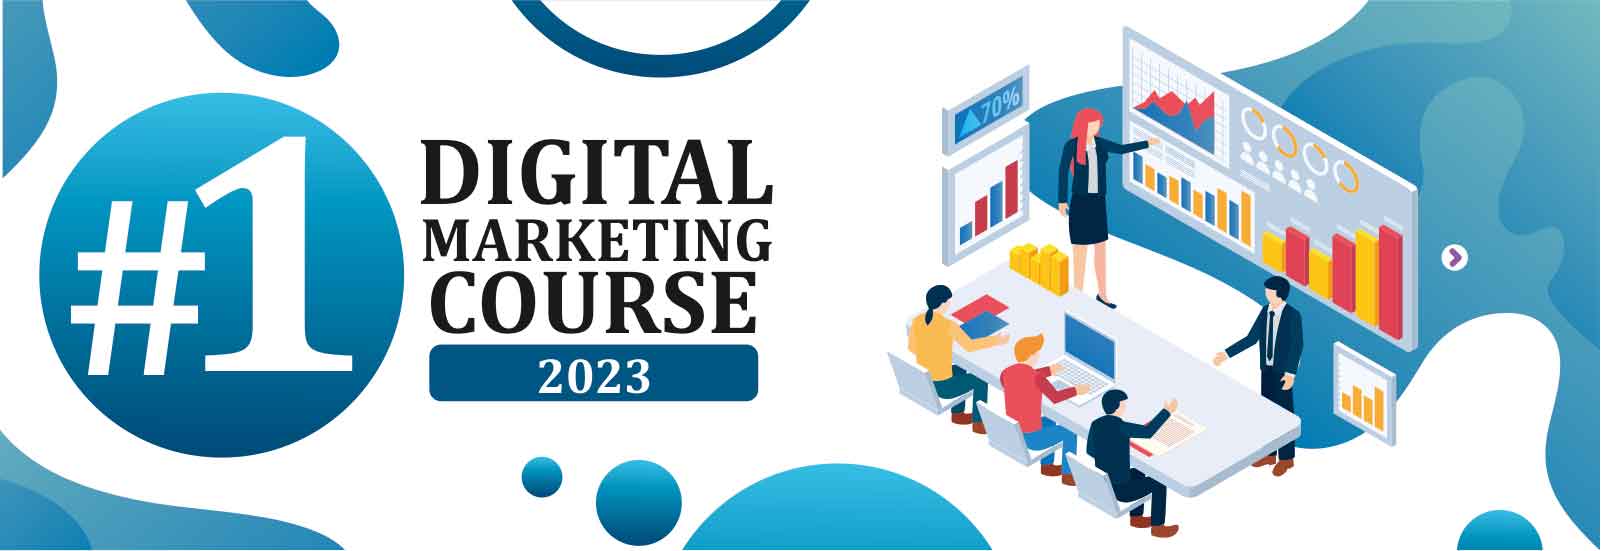 Digital Marketing Course in Jaipur - TIFA Education